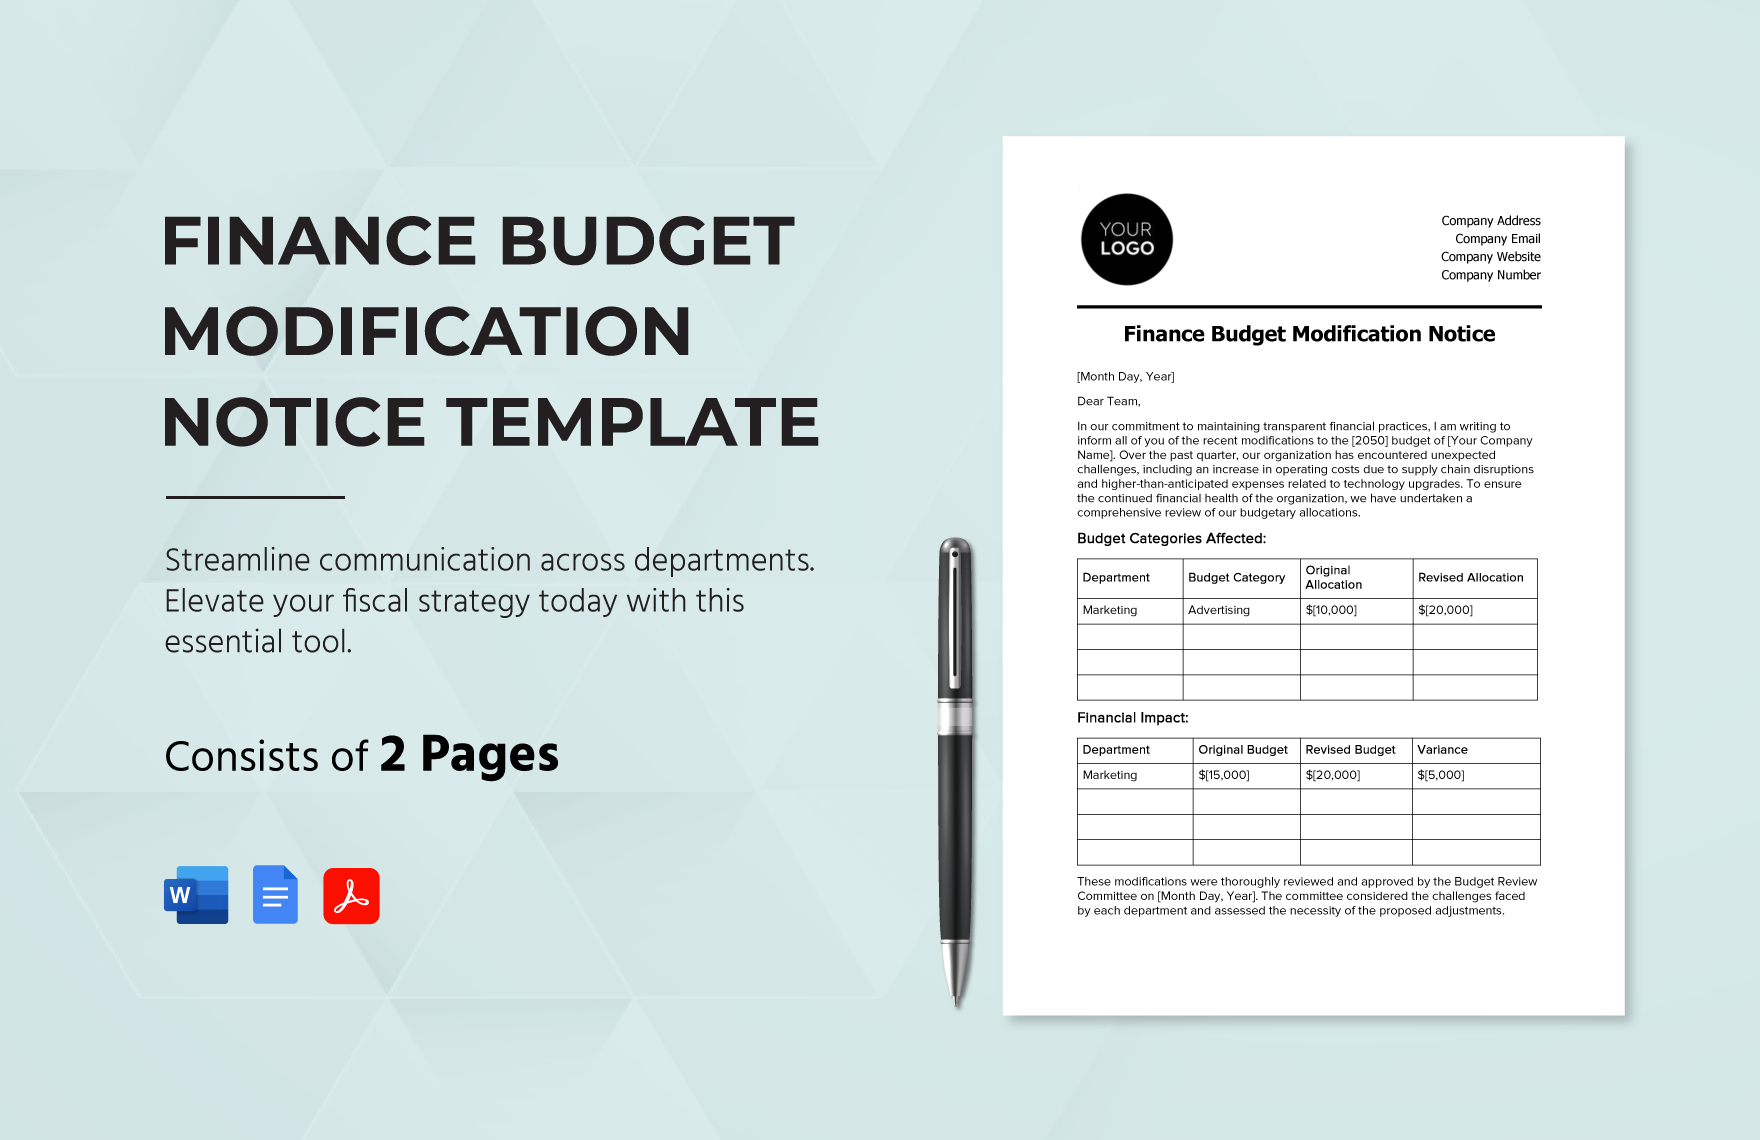 Finance Budget Modification Notice Template